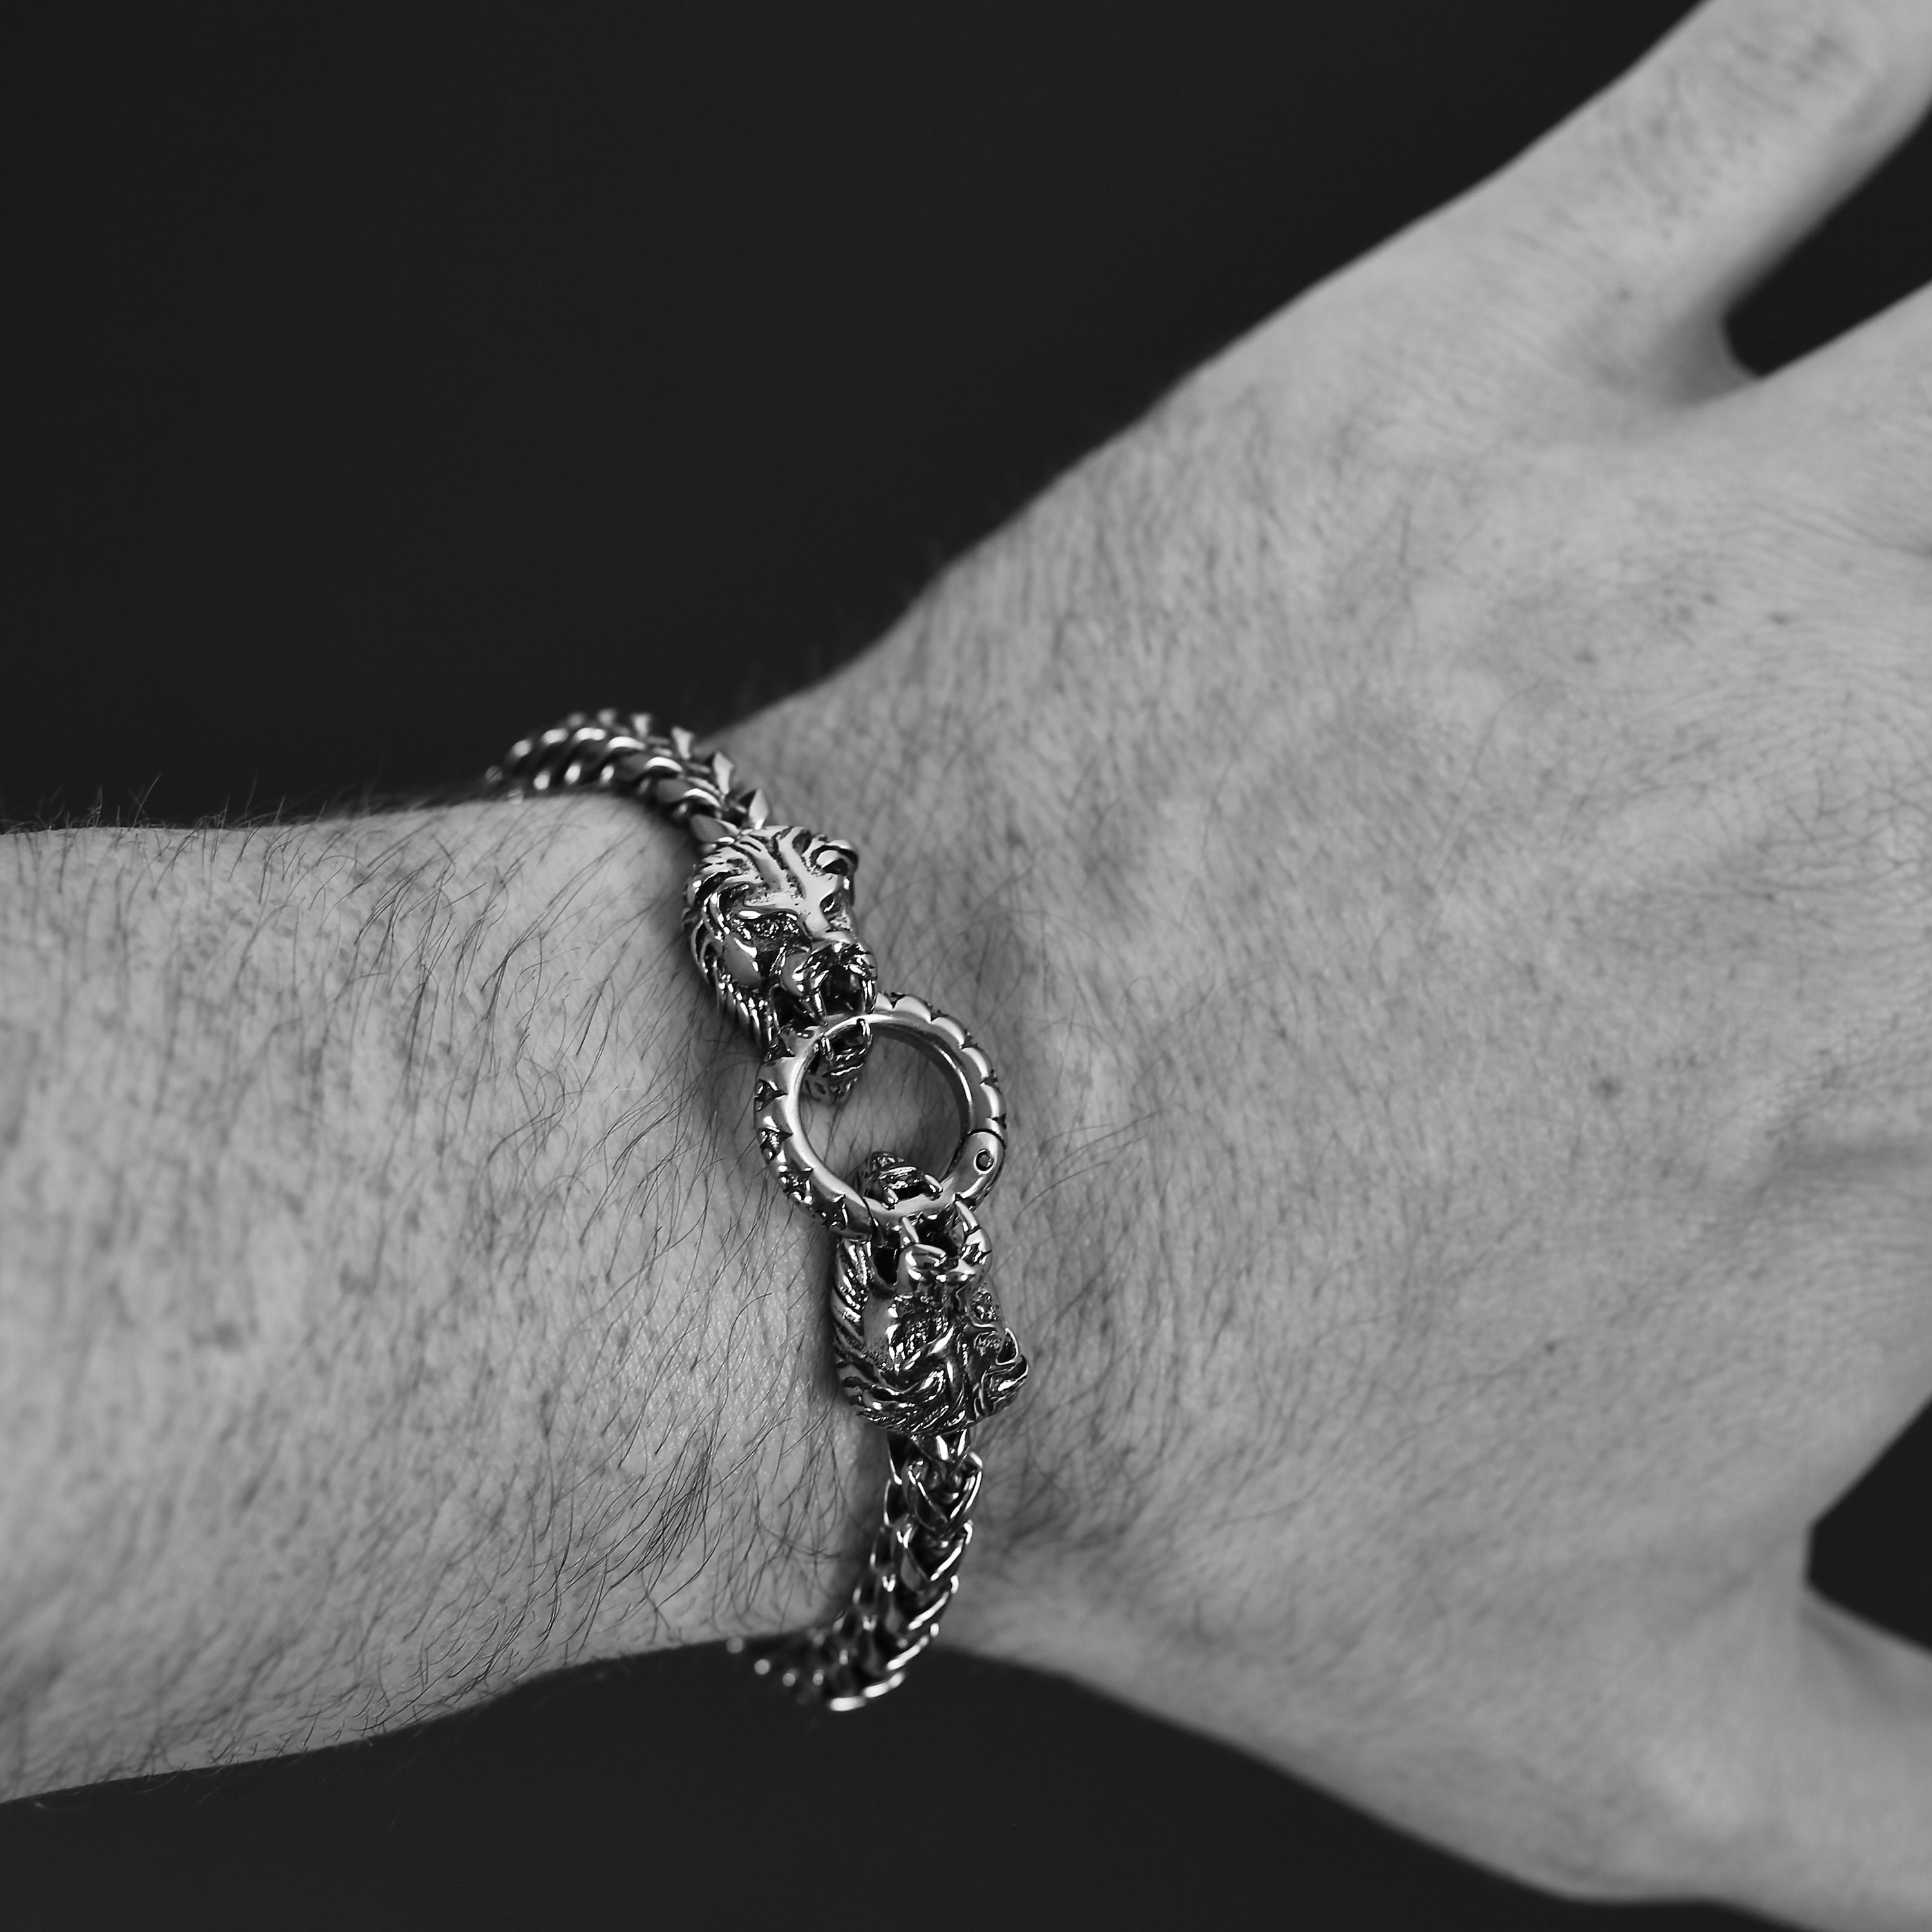 Lion Bracelet - Silver